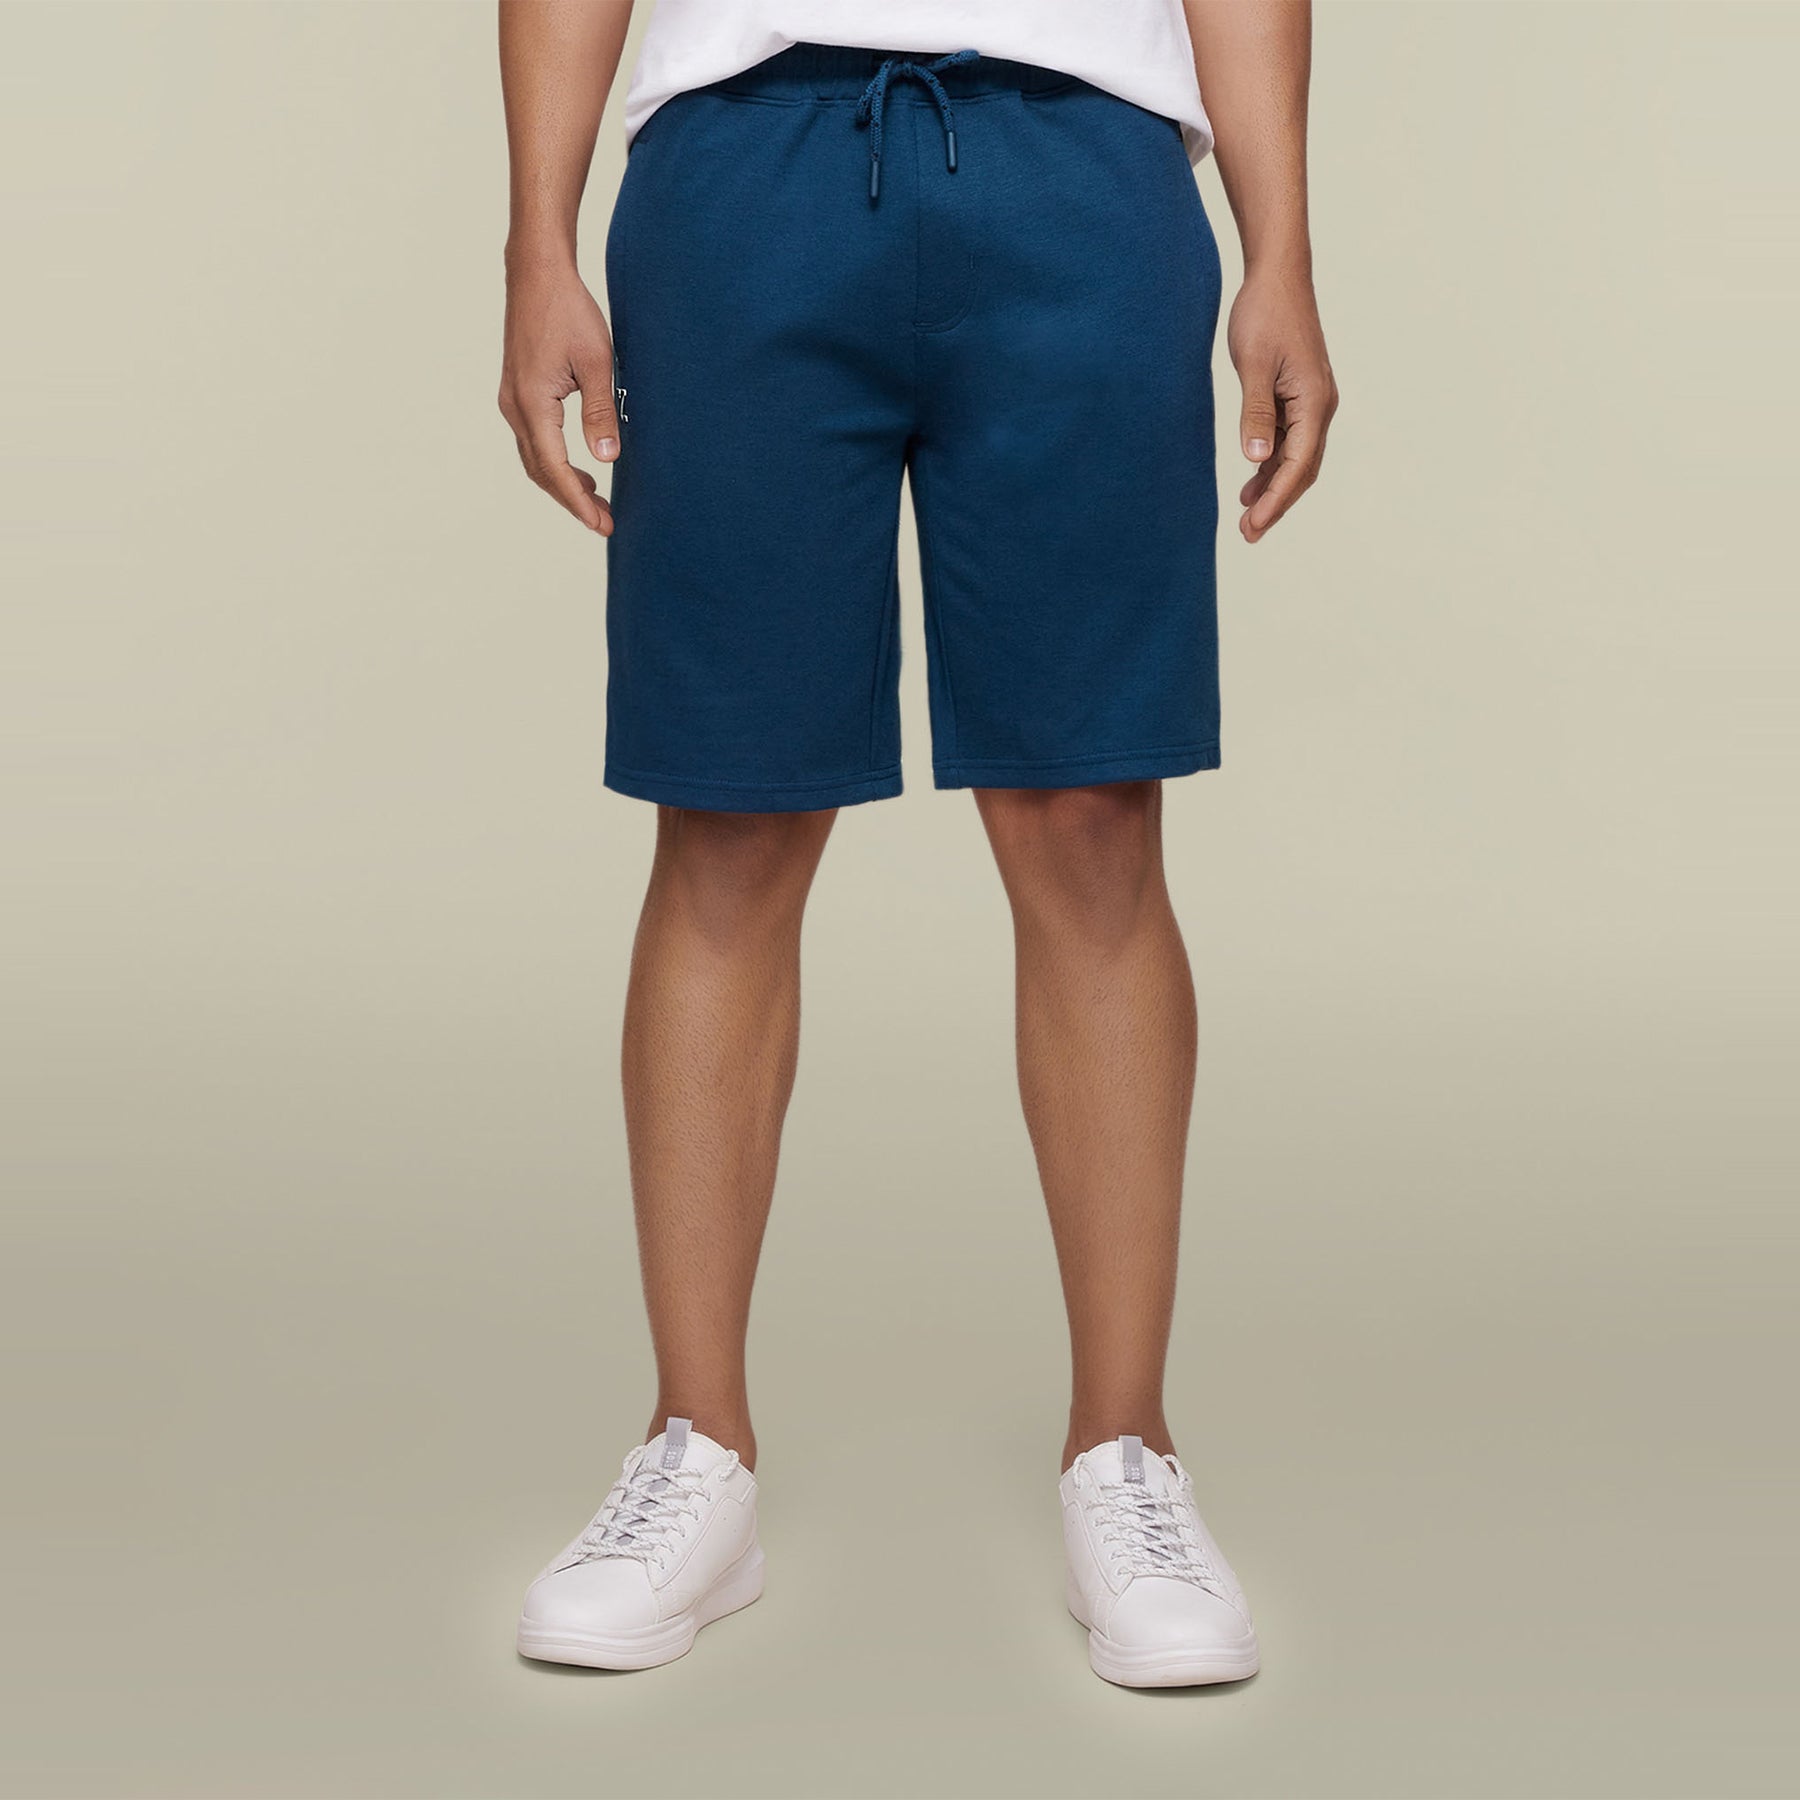 Code Cotton Rich Shorts For Men Oxford Blue - XYXX Crew